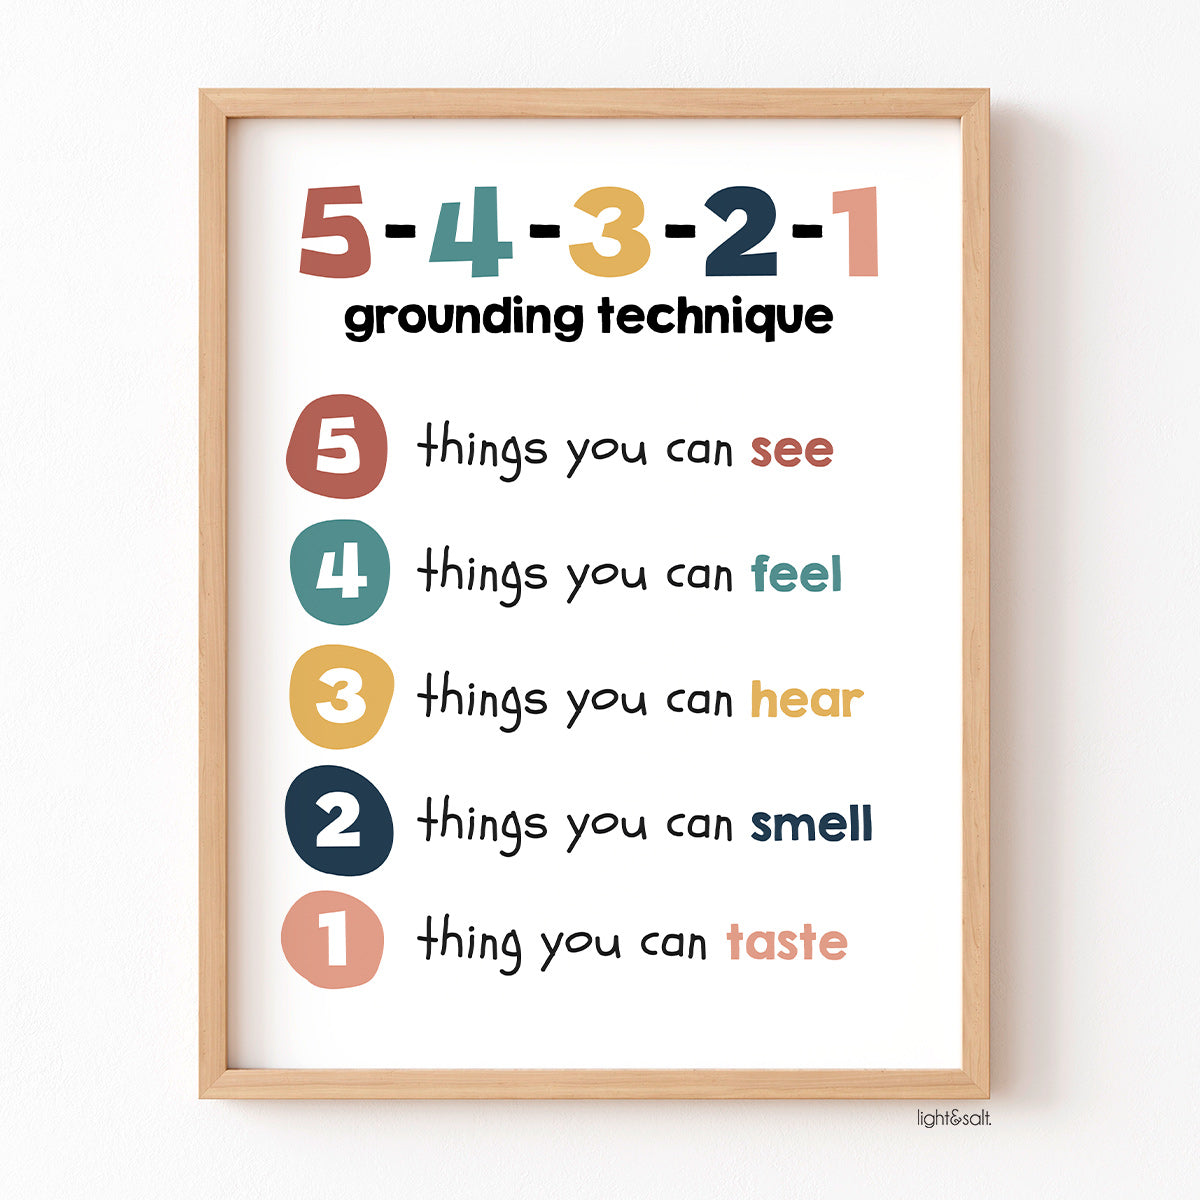 5,4,3,2,1 Grounding technique poster